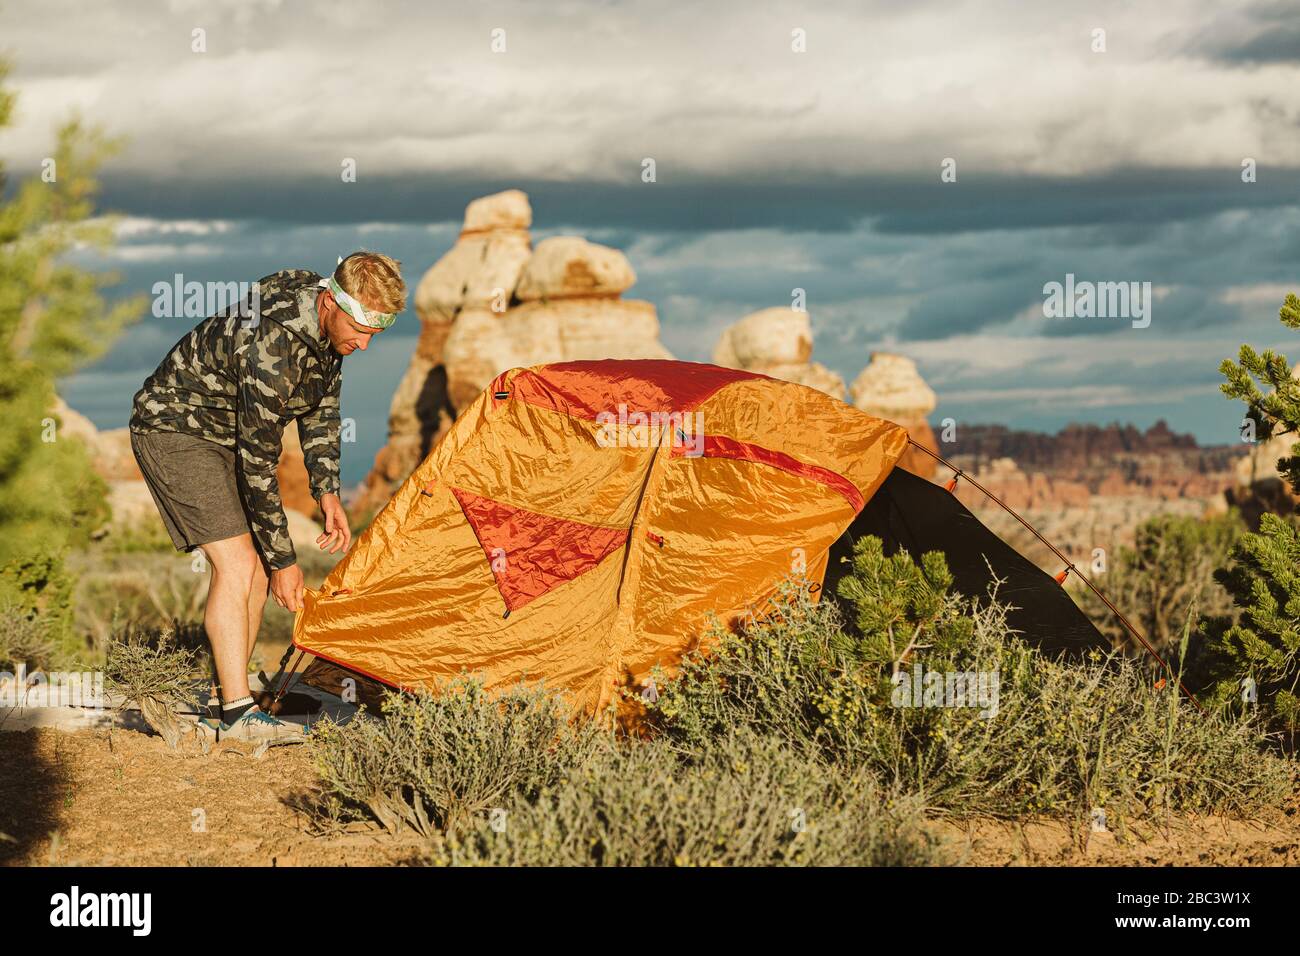 camper in camo windbreaker finishes setting up tent in utah desert Stock Photo